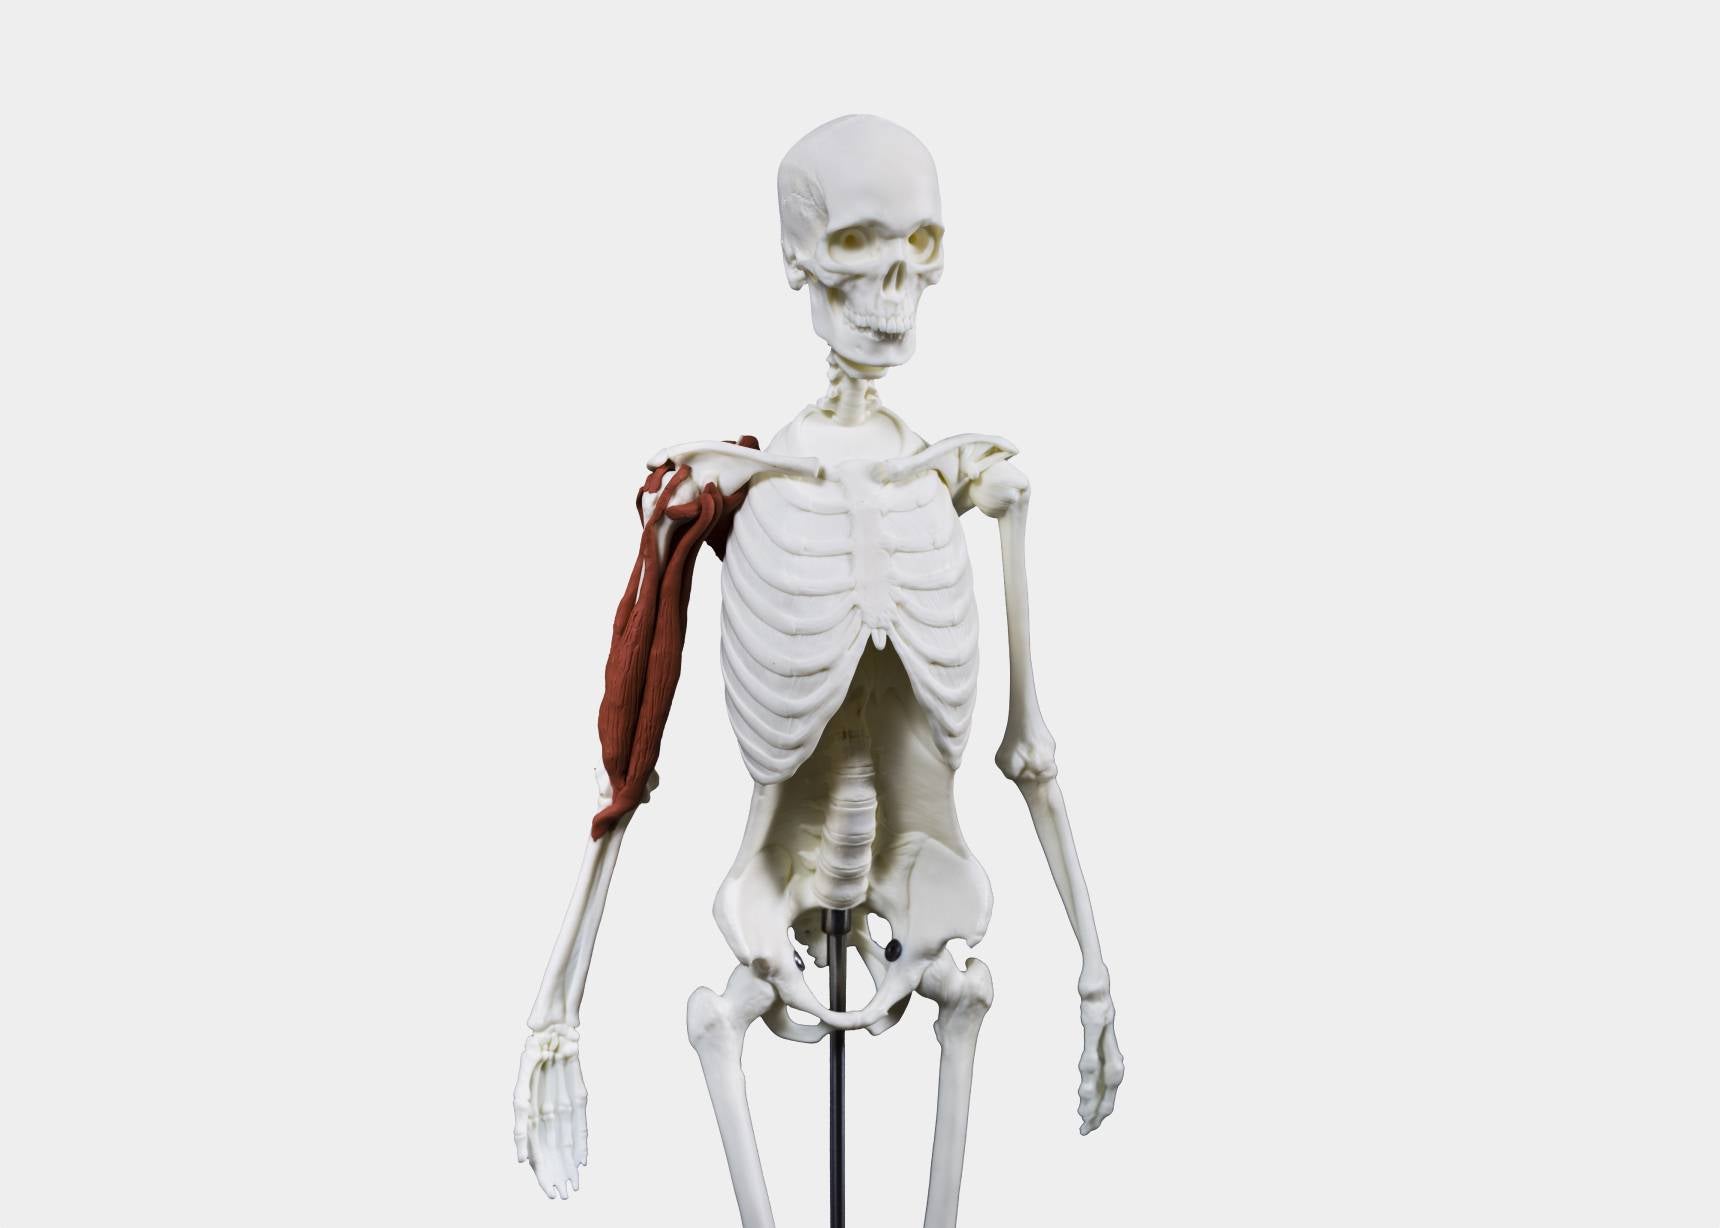 Skeleton displaying upper body anatomical movements.